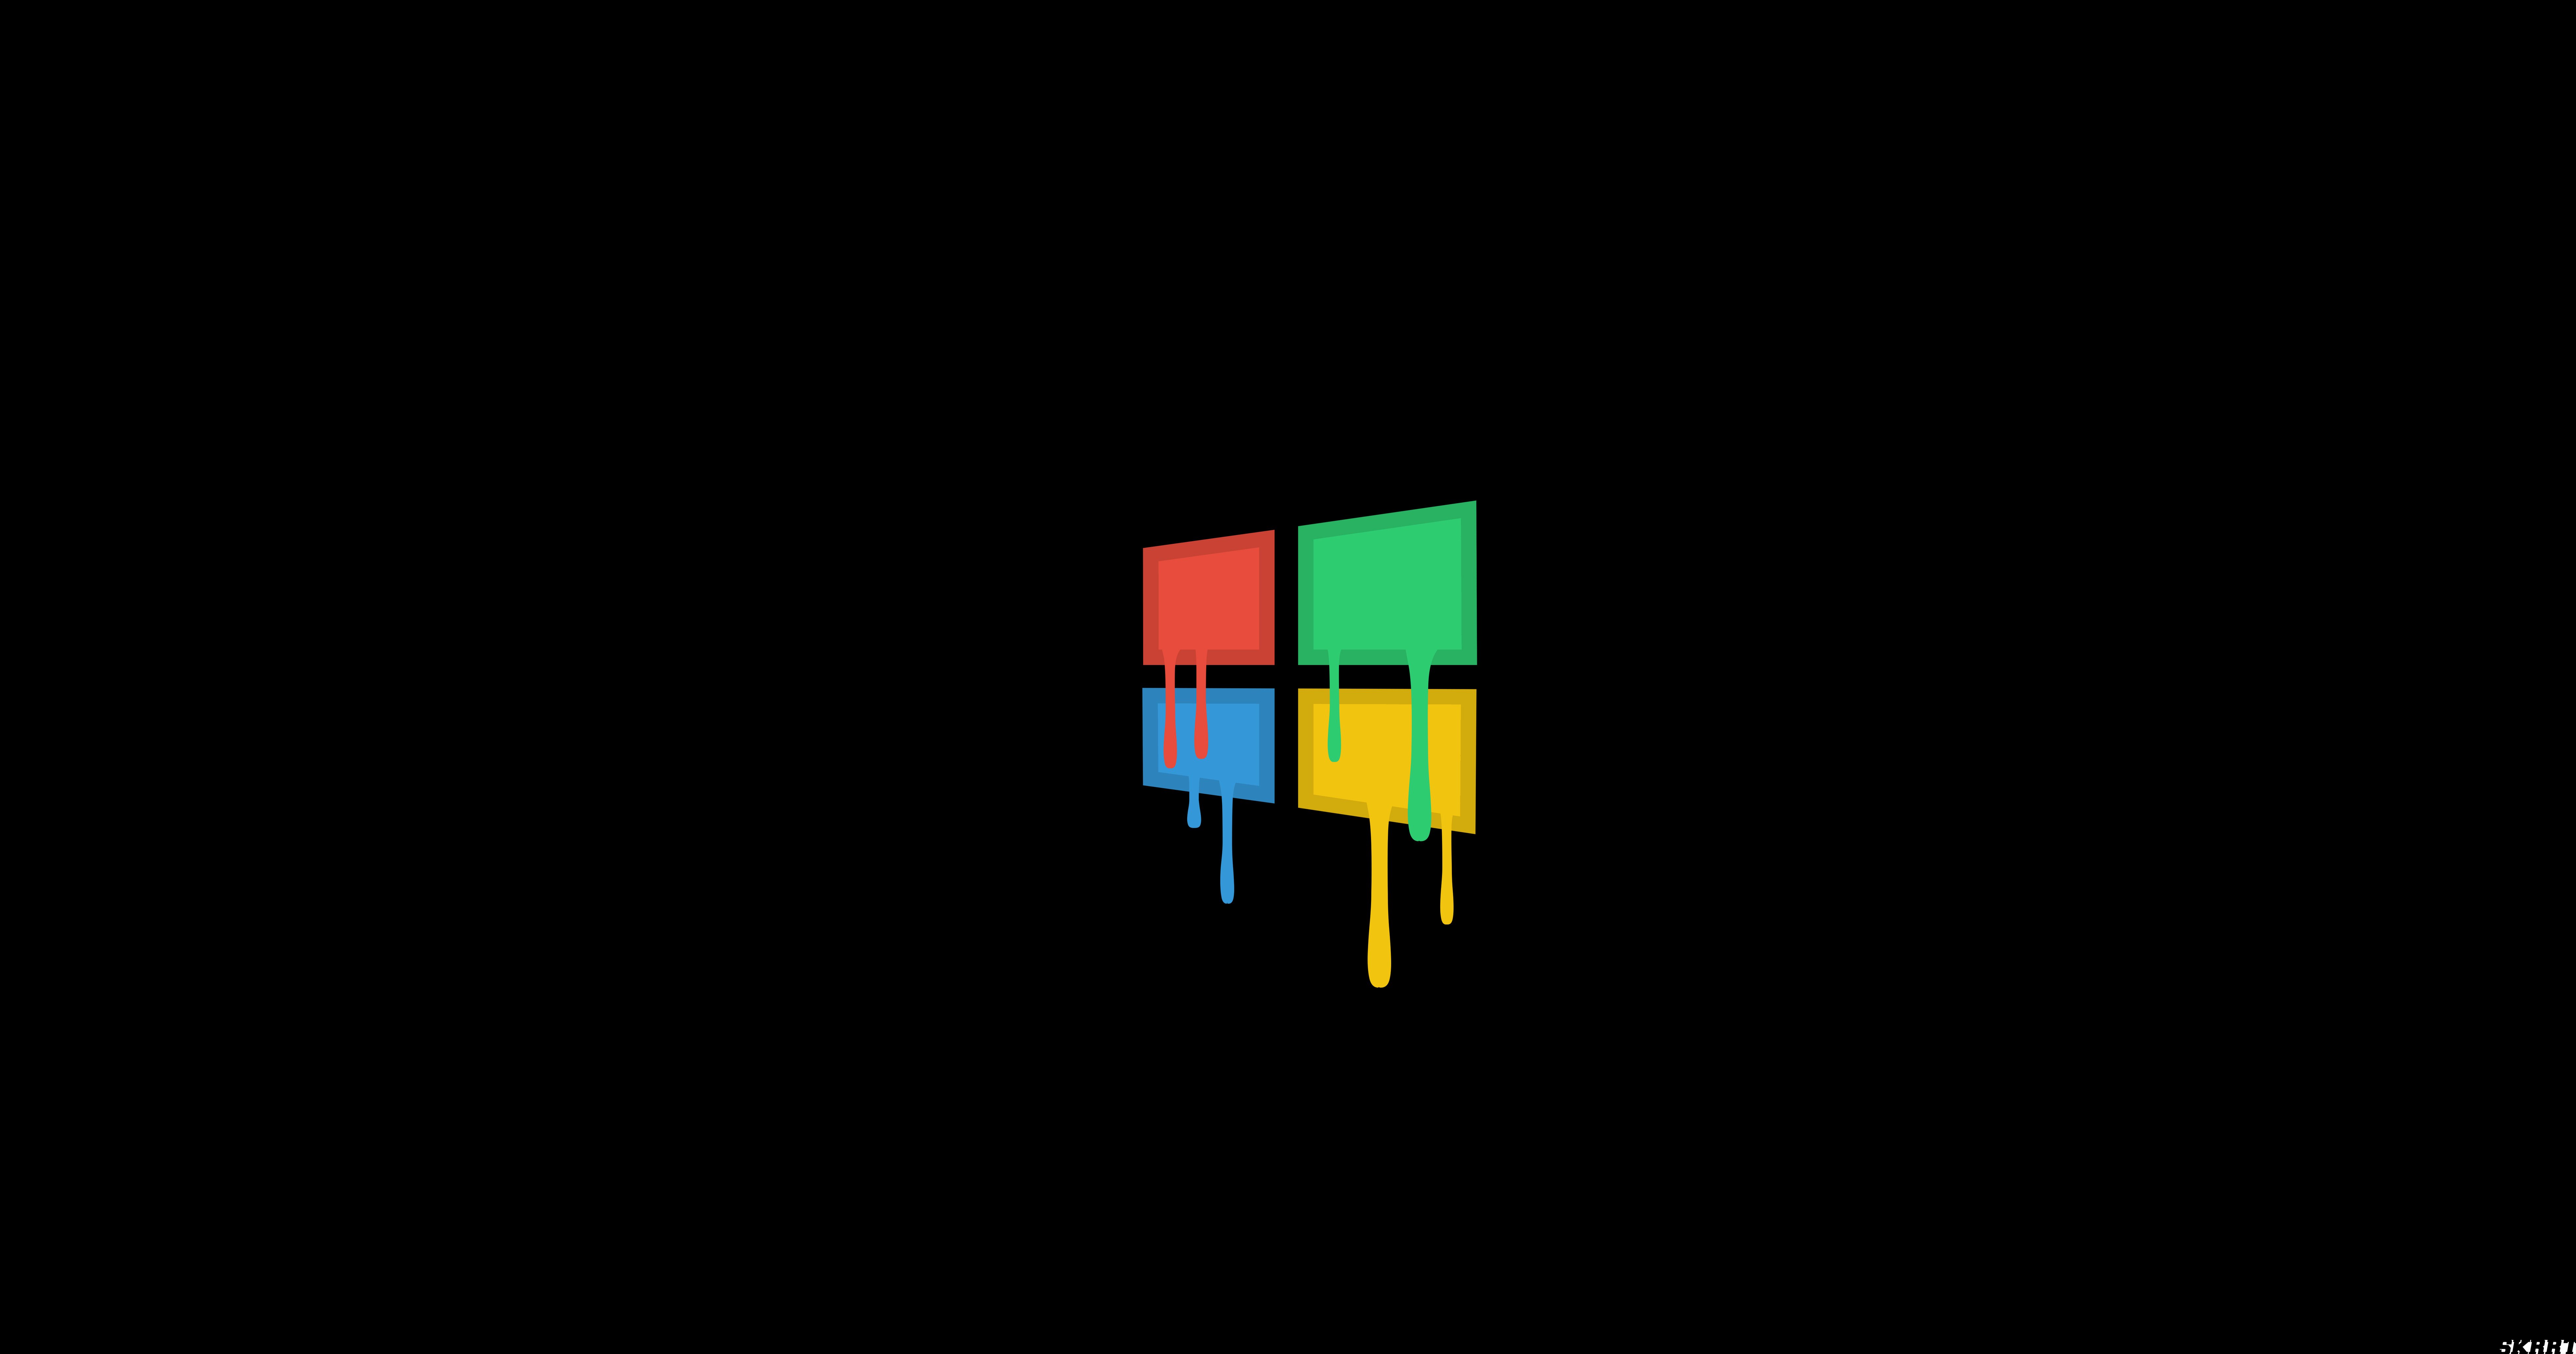 General 7842x4123 windows logo simple background black background minimalism digital art Microsoft Windows dripping paint logo operating system